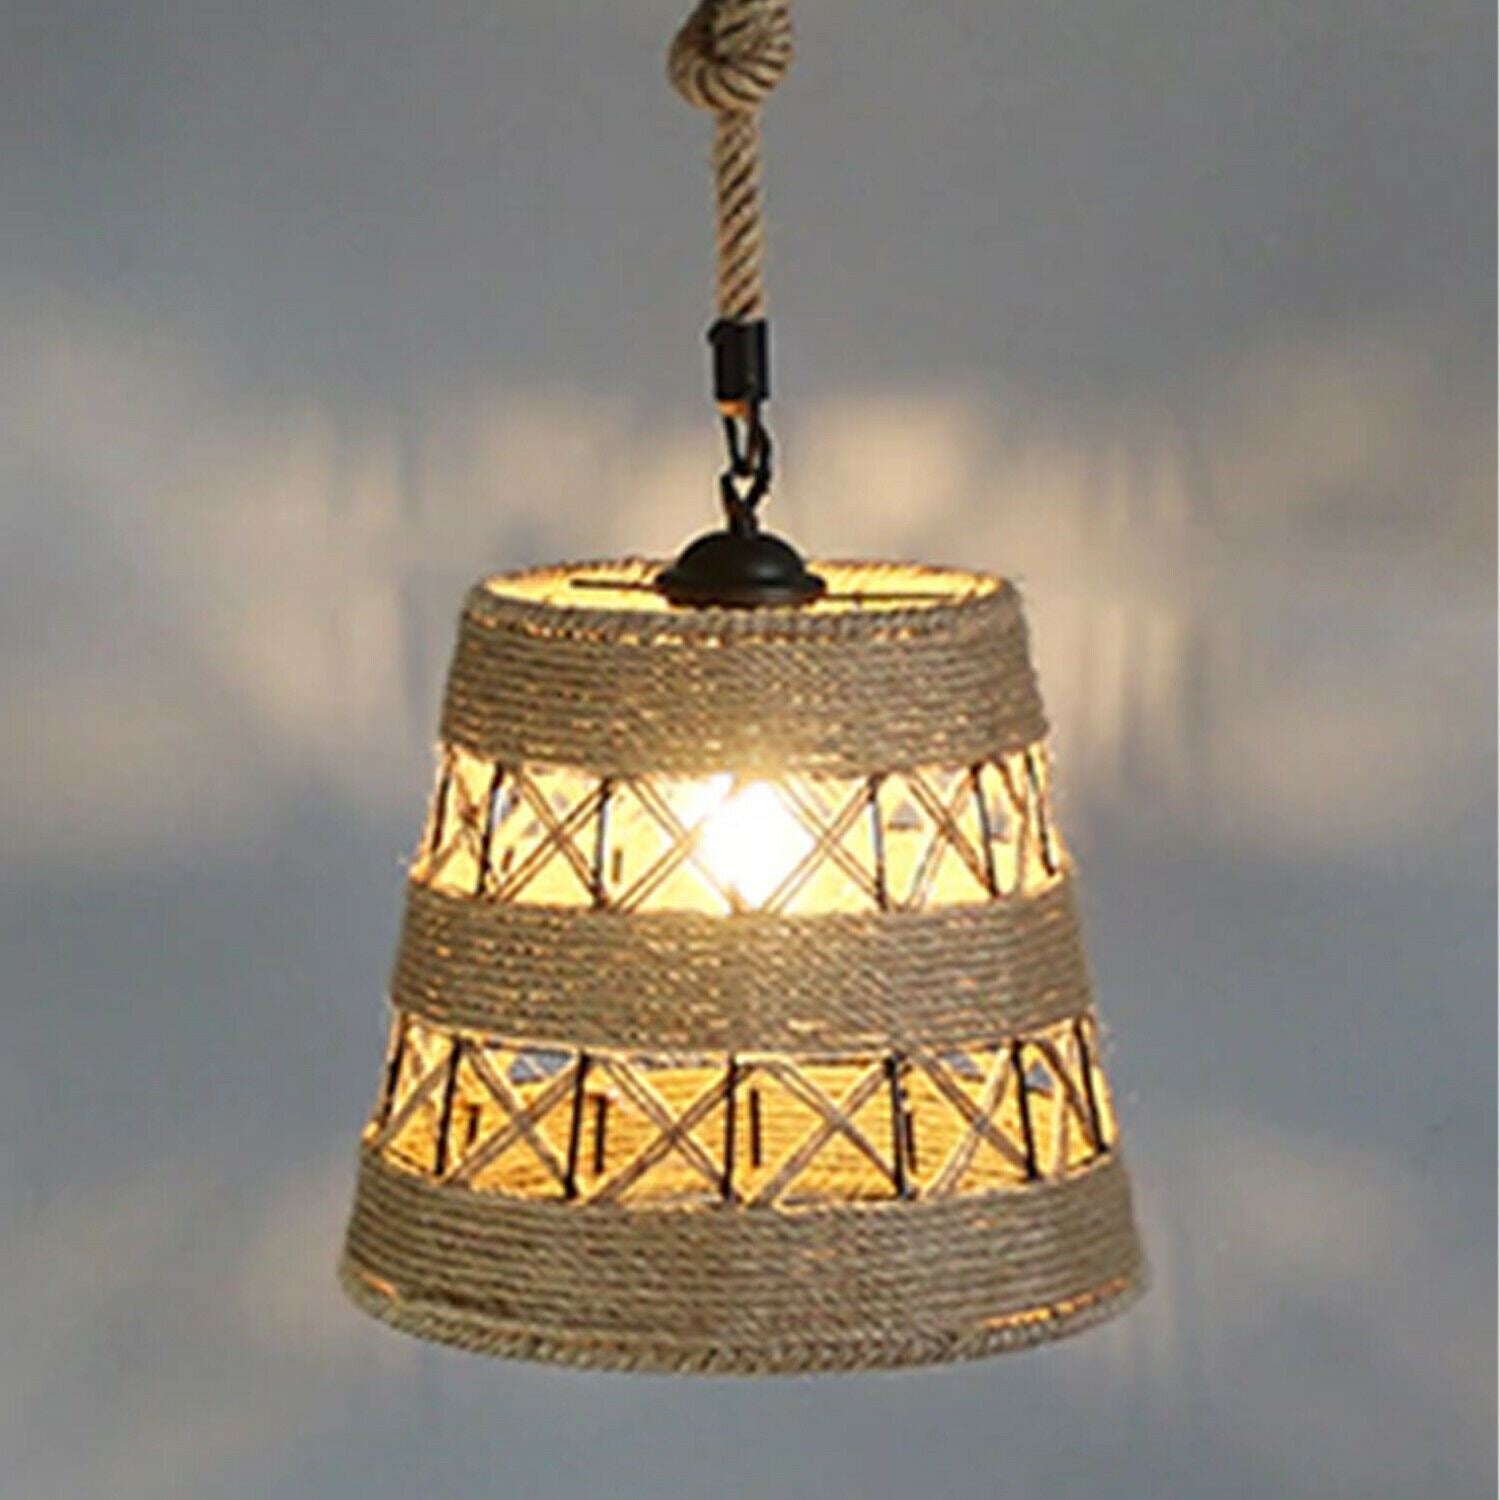 hemp rope ceiling light